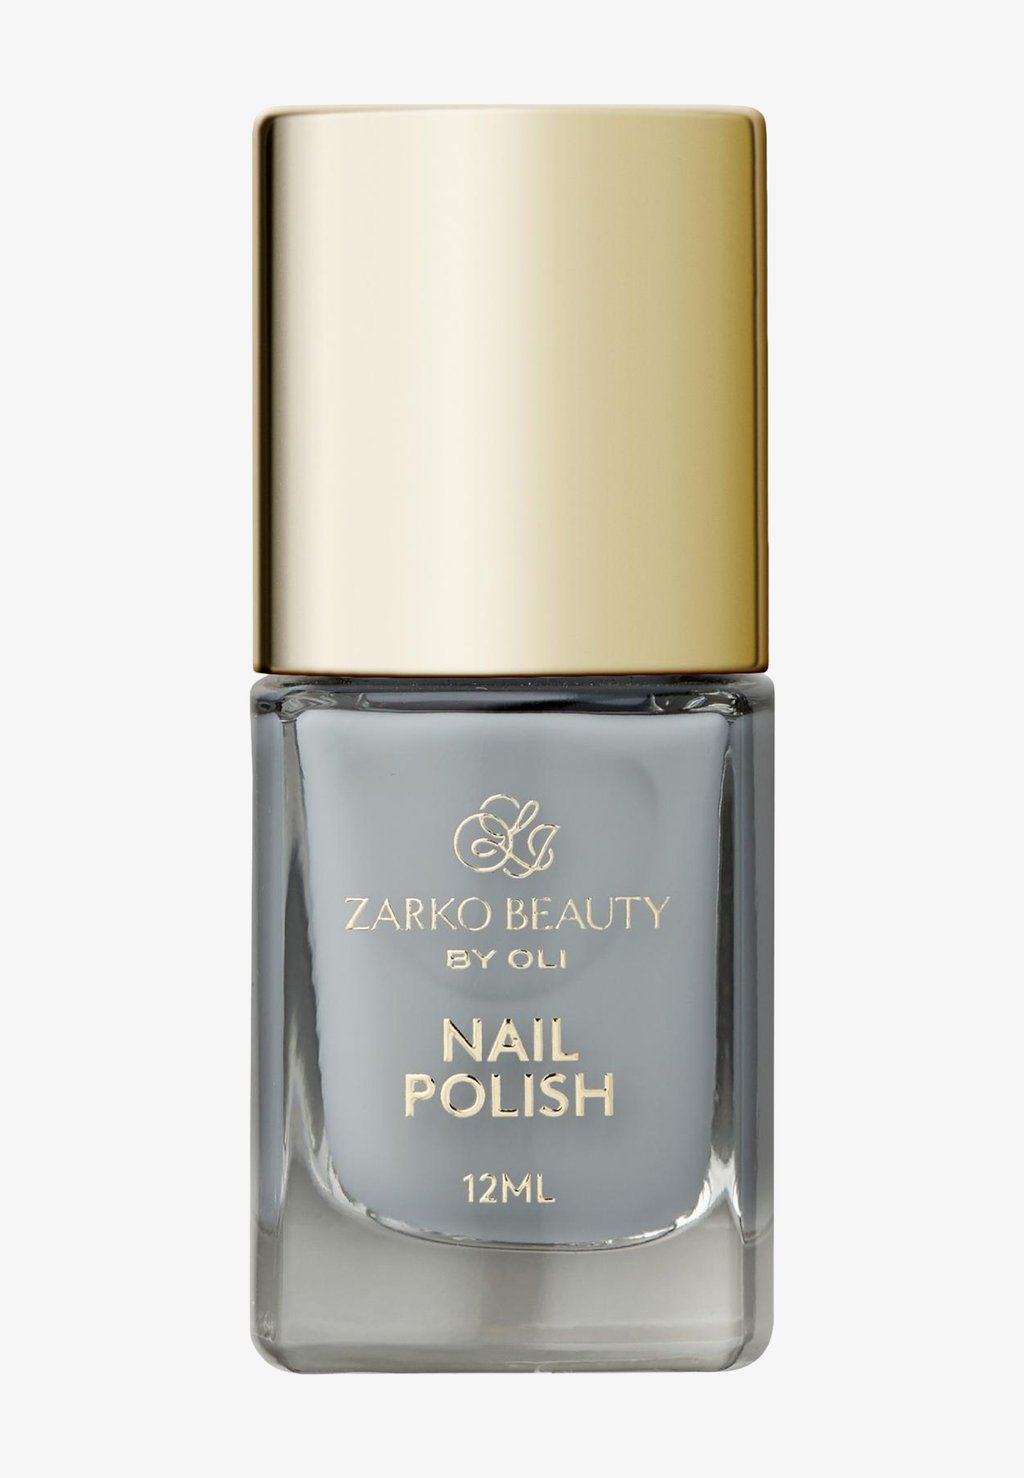 Лак для ногтей Nail Polish ZARKO BEAUTY BY OLI, цвет ash